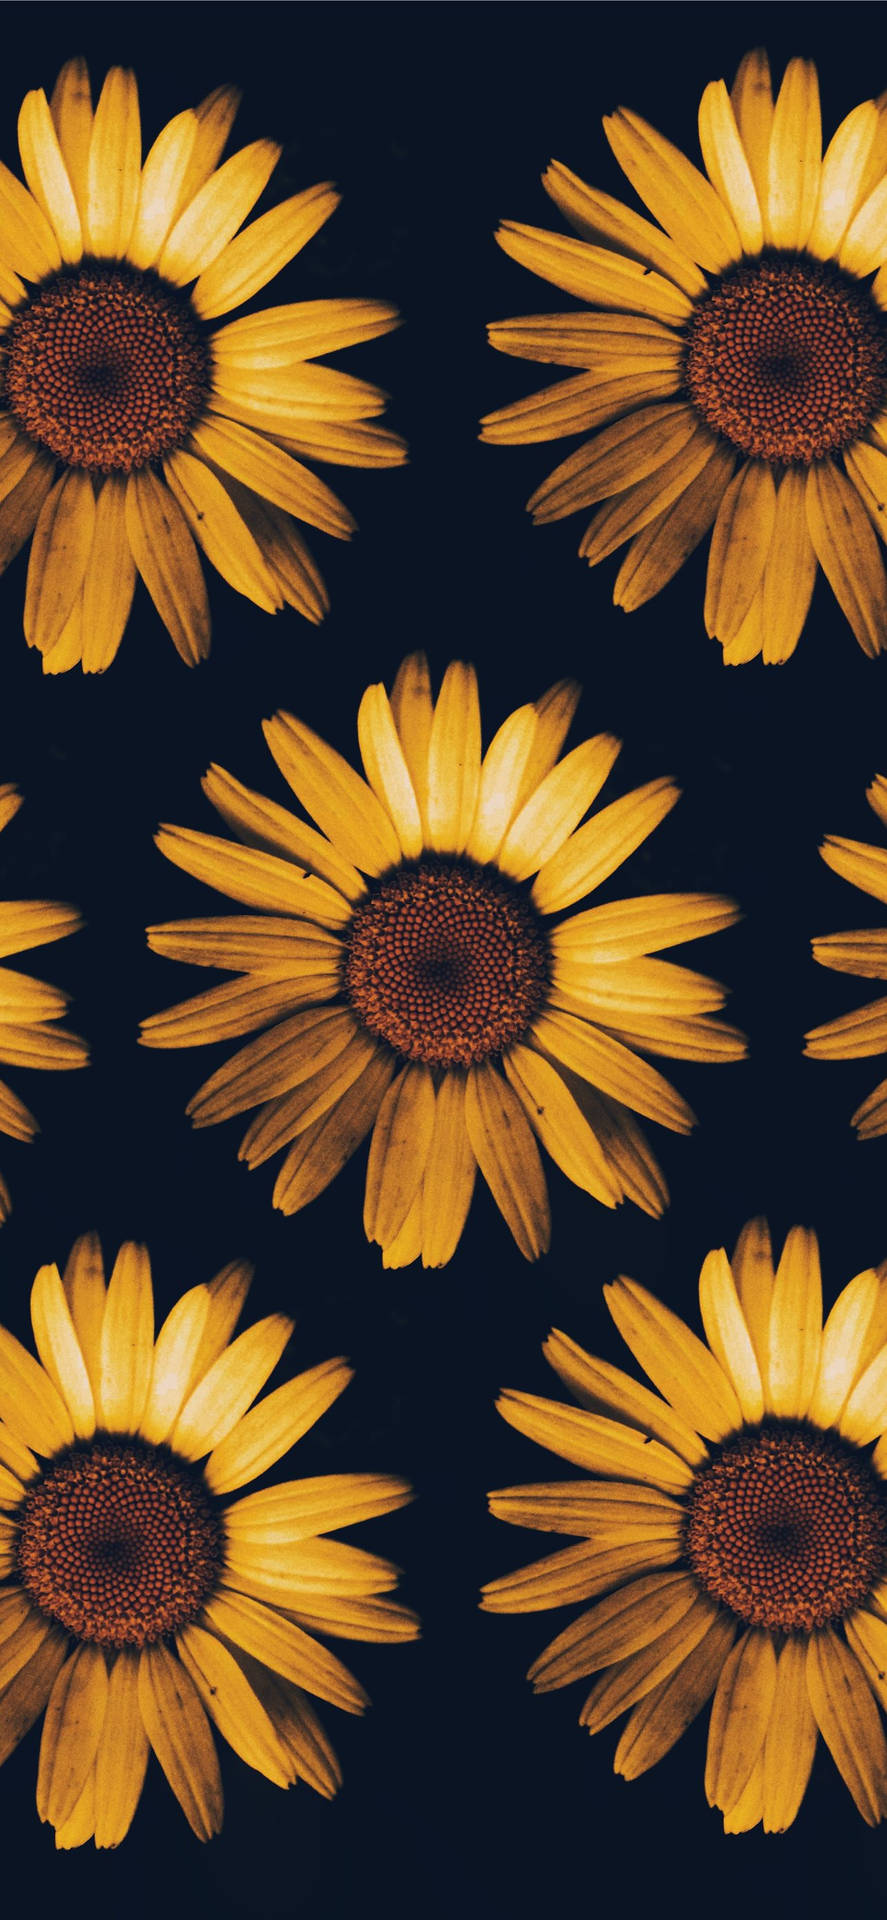 Free Sunflower Wallpaper iPhone - Download in Illustrator, EPS, SVG, JPG,  PNG | Template.net